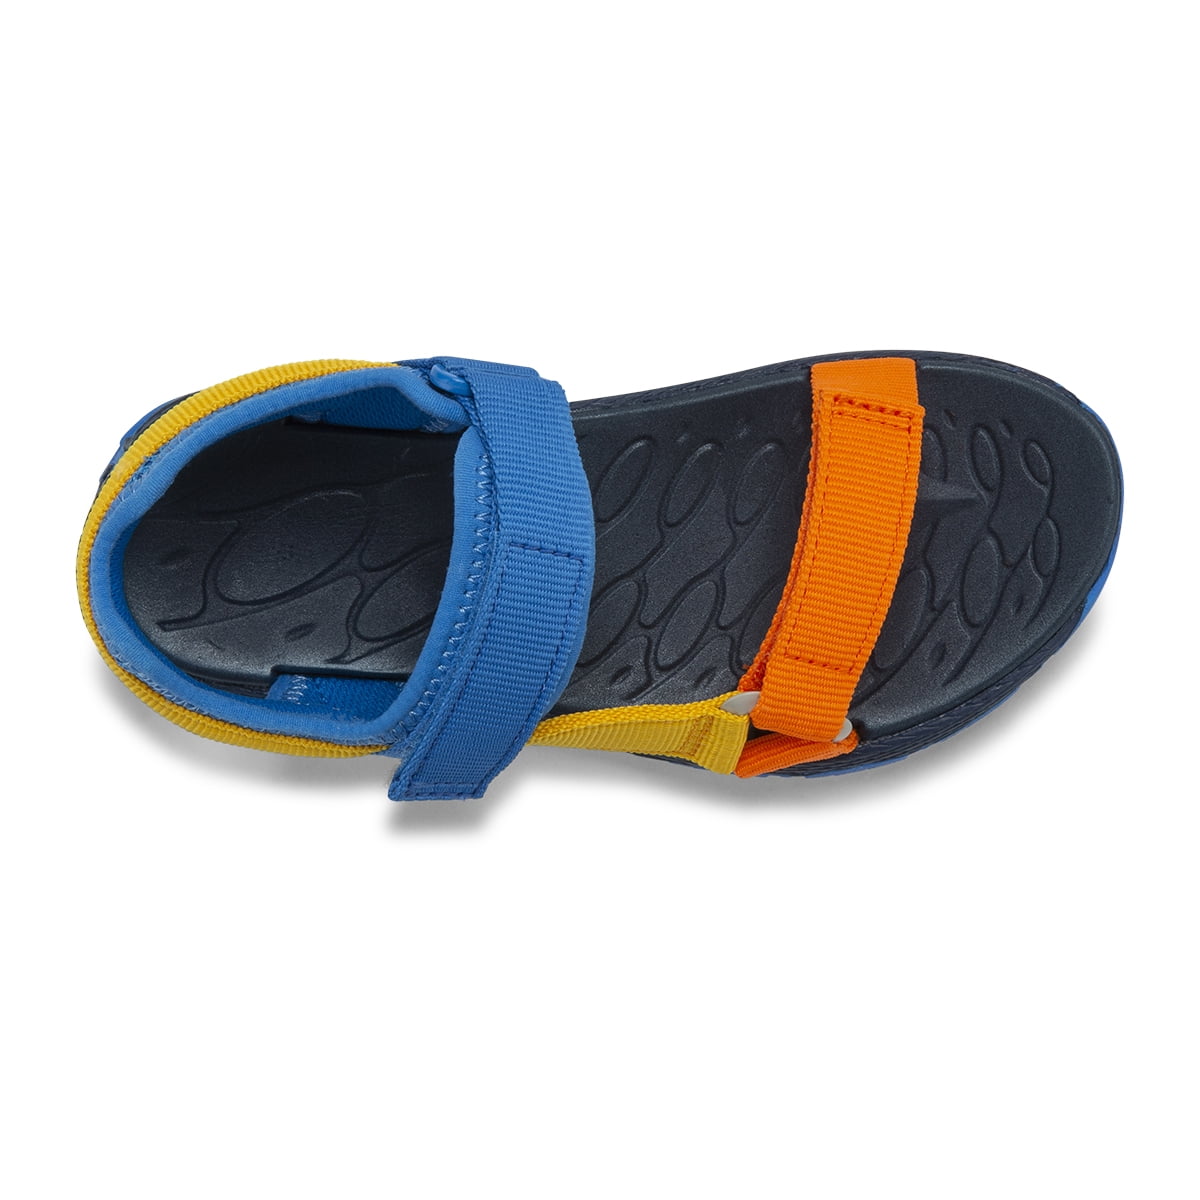 Merrell Boys Kahuna Web Boys's Shoes Sandals Multicoloured Sports Outdoors 